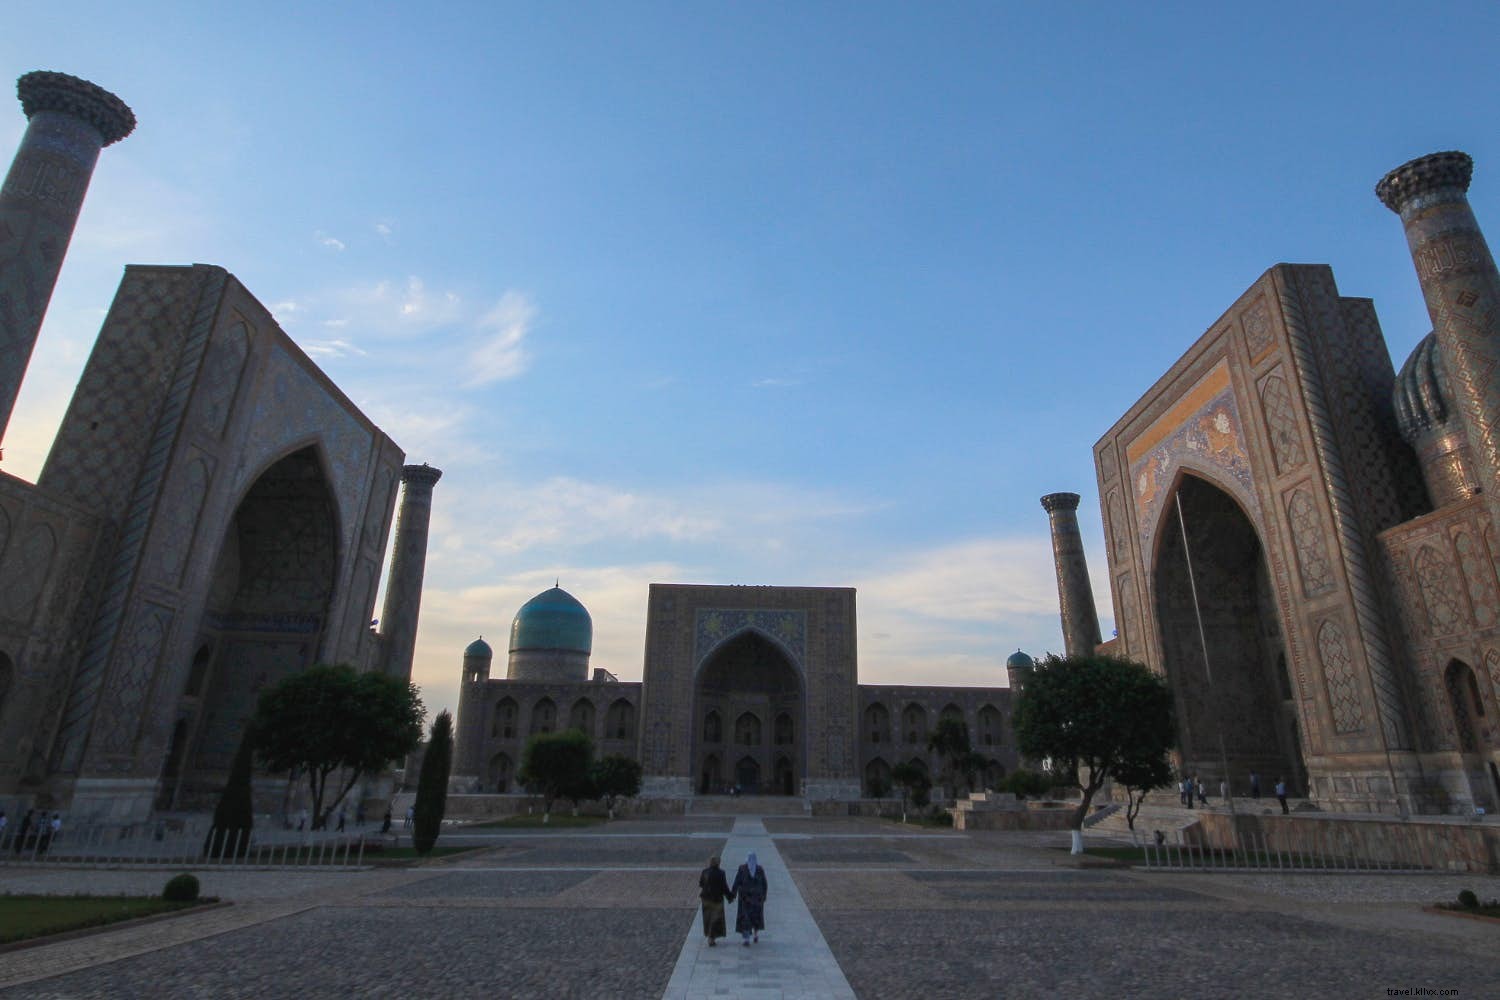 Viajero de dos semanas:aventuras por Asia Central 